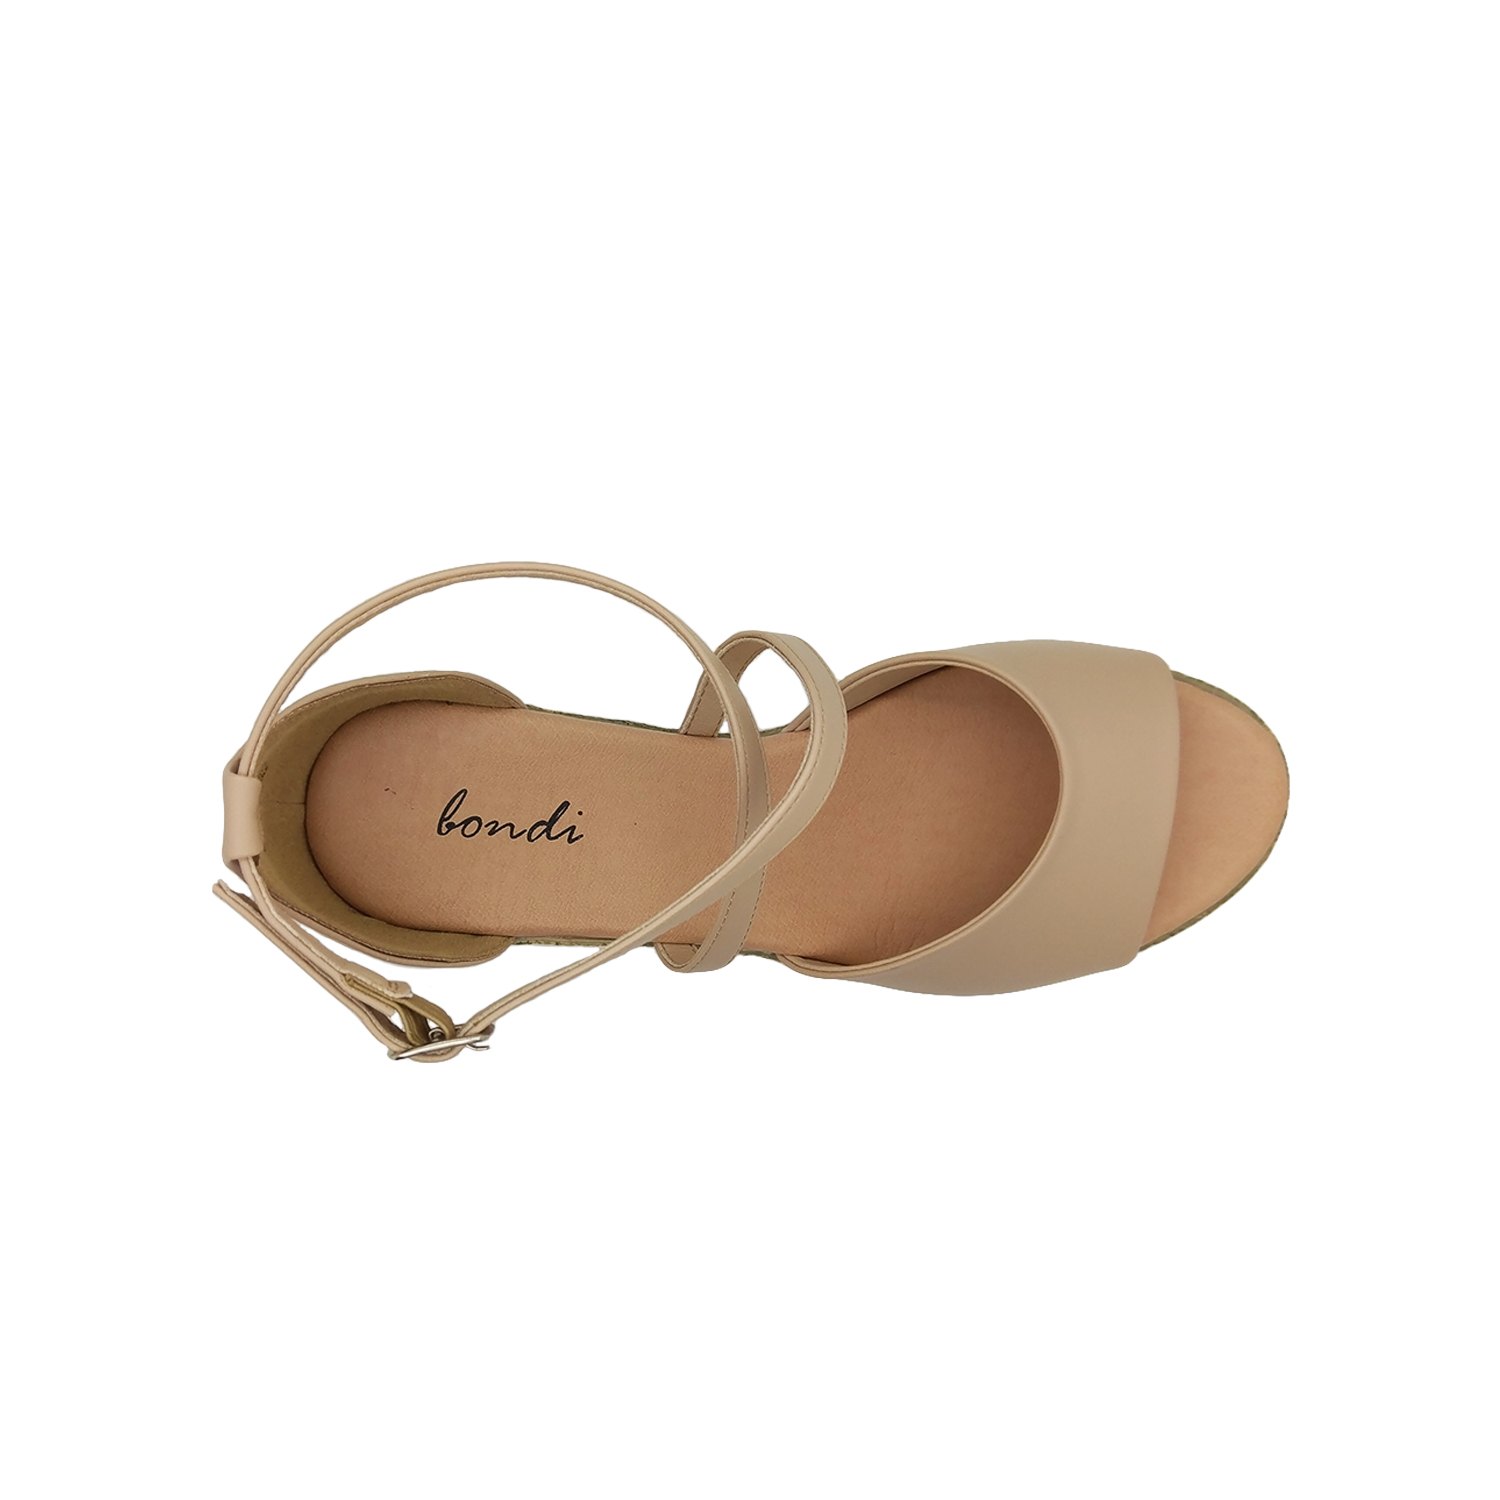 Bondi Winter Ladies Dress Sandals Crossover Ankle Strap Heel In Wedge Size  5-10